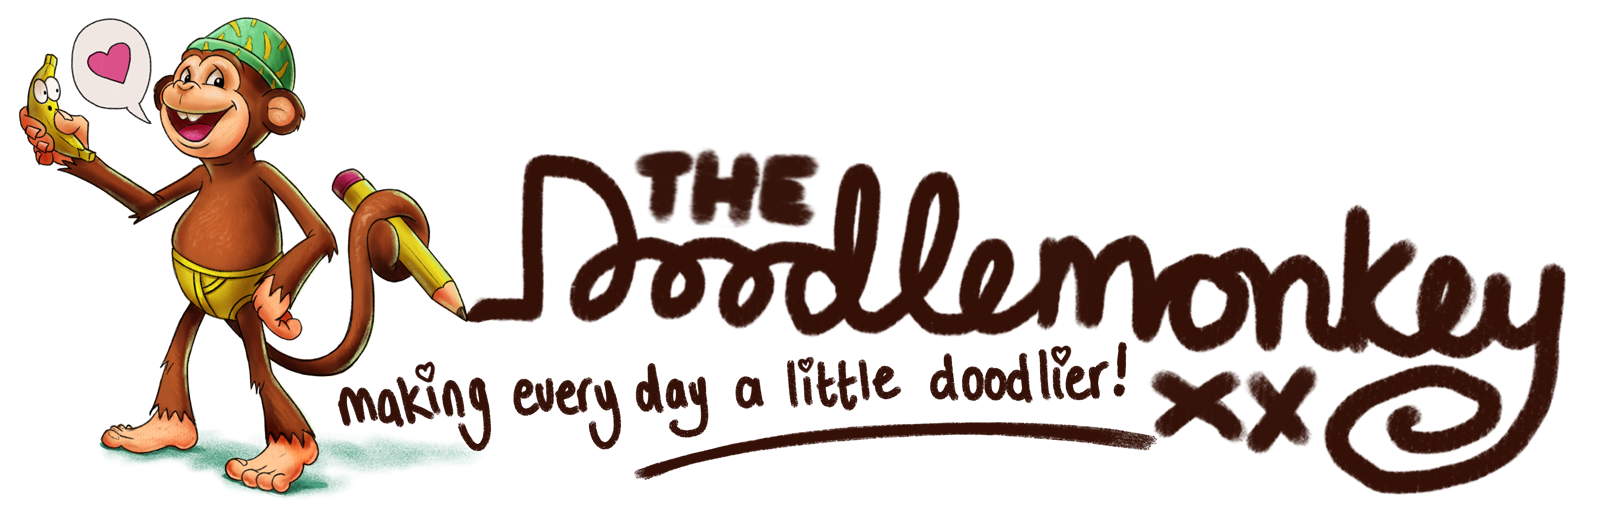 The Doodle Monkey